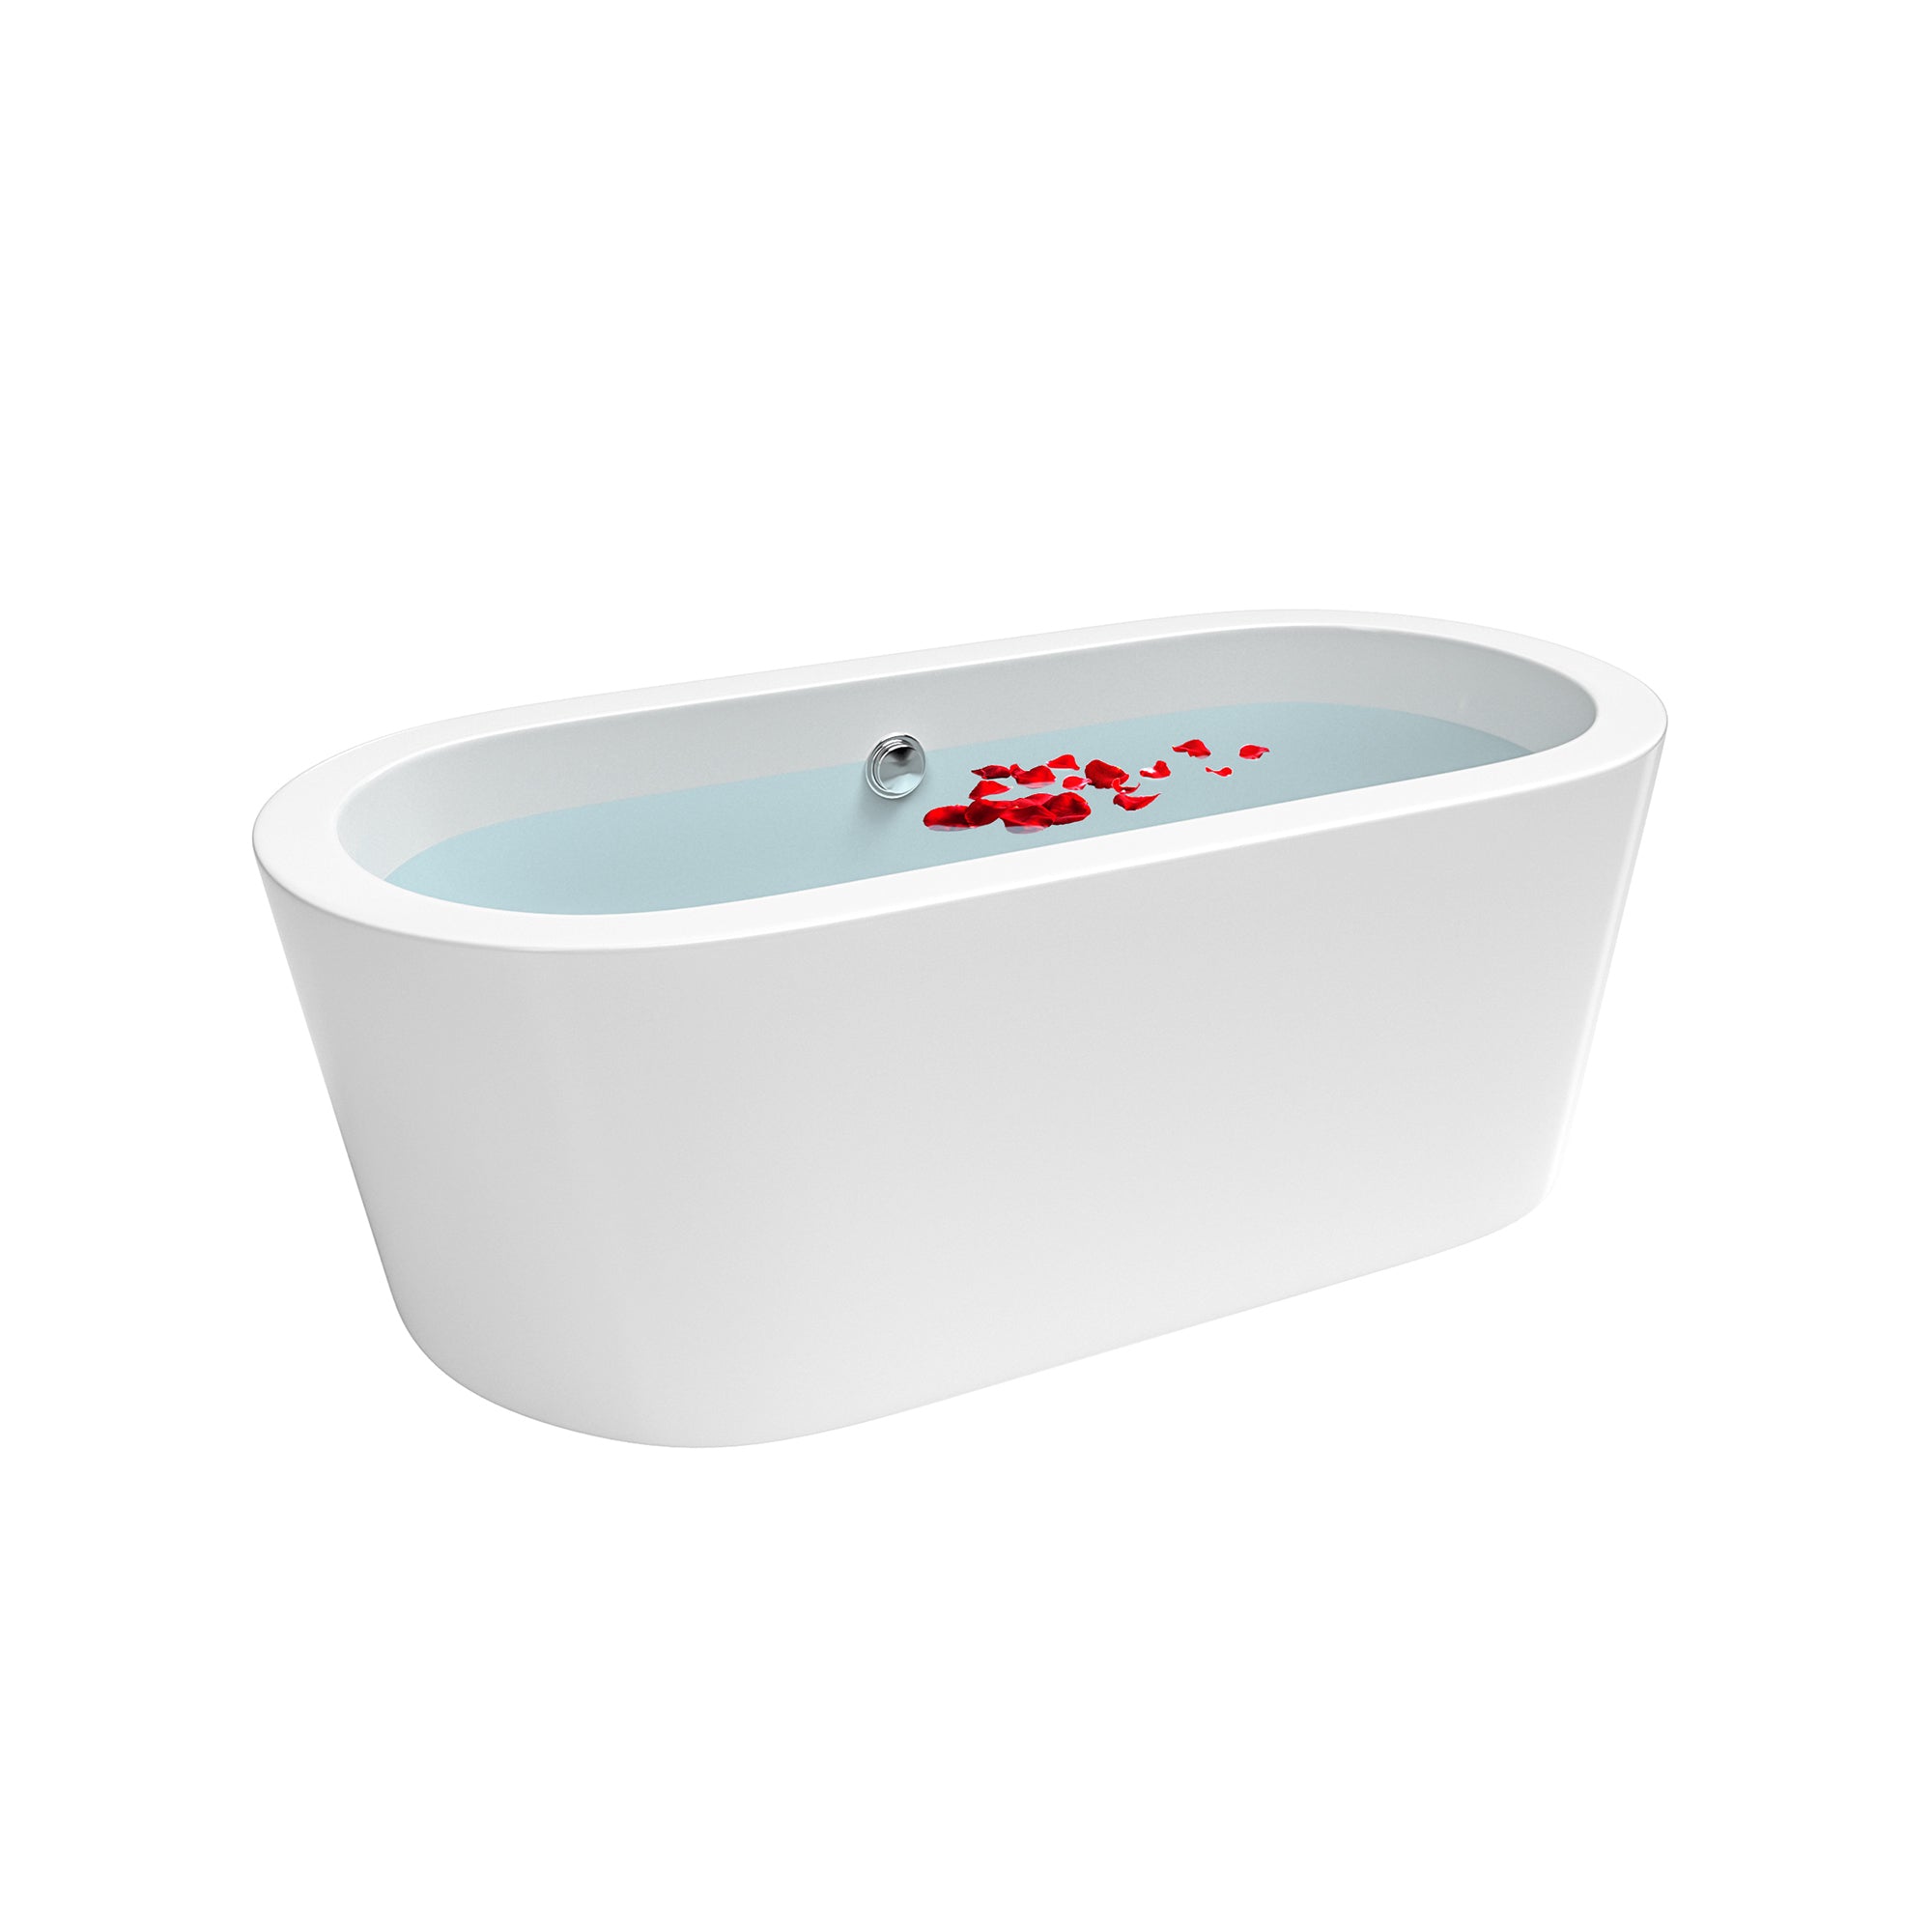 Empava-59FT1505 bathtub